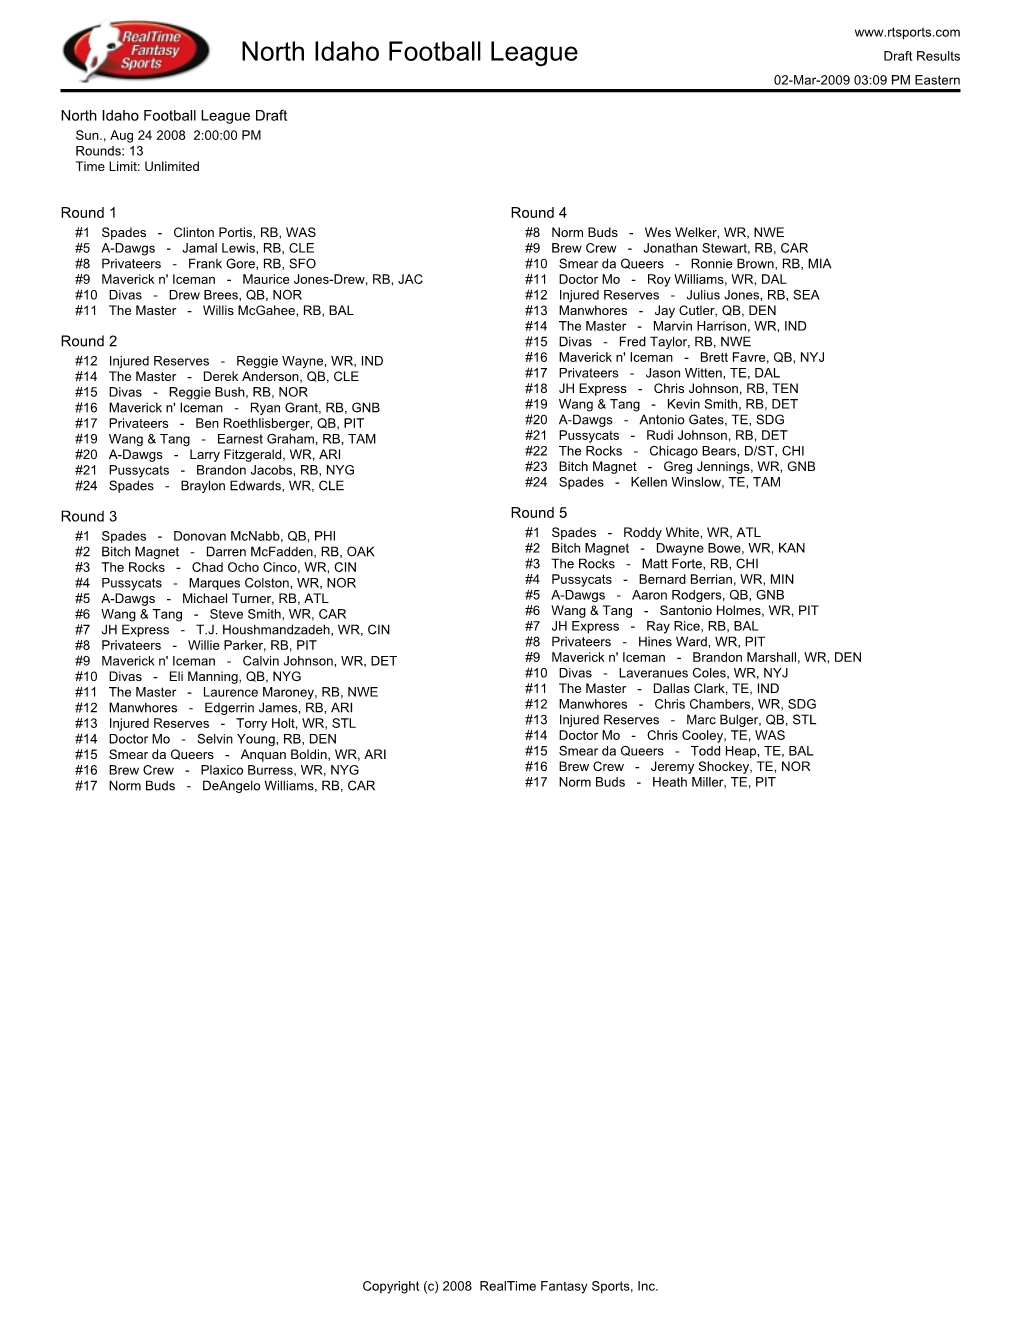 North Idaho Football League Draft Results 02-Mar-2009 03:09 PM Eastern